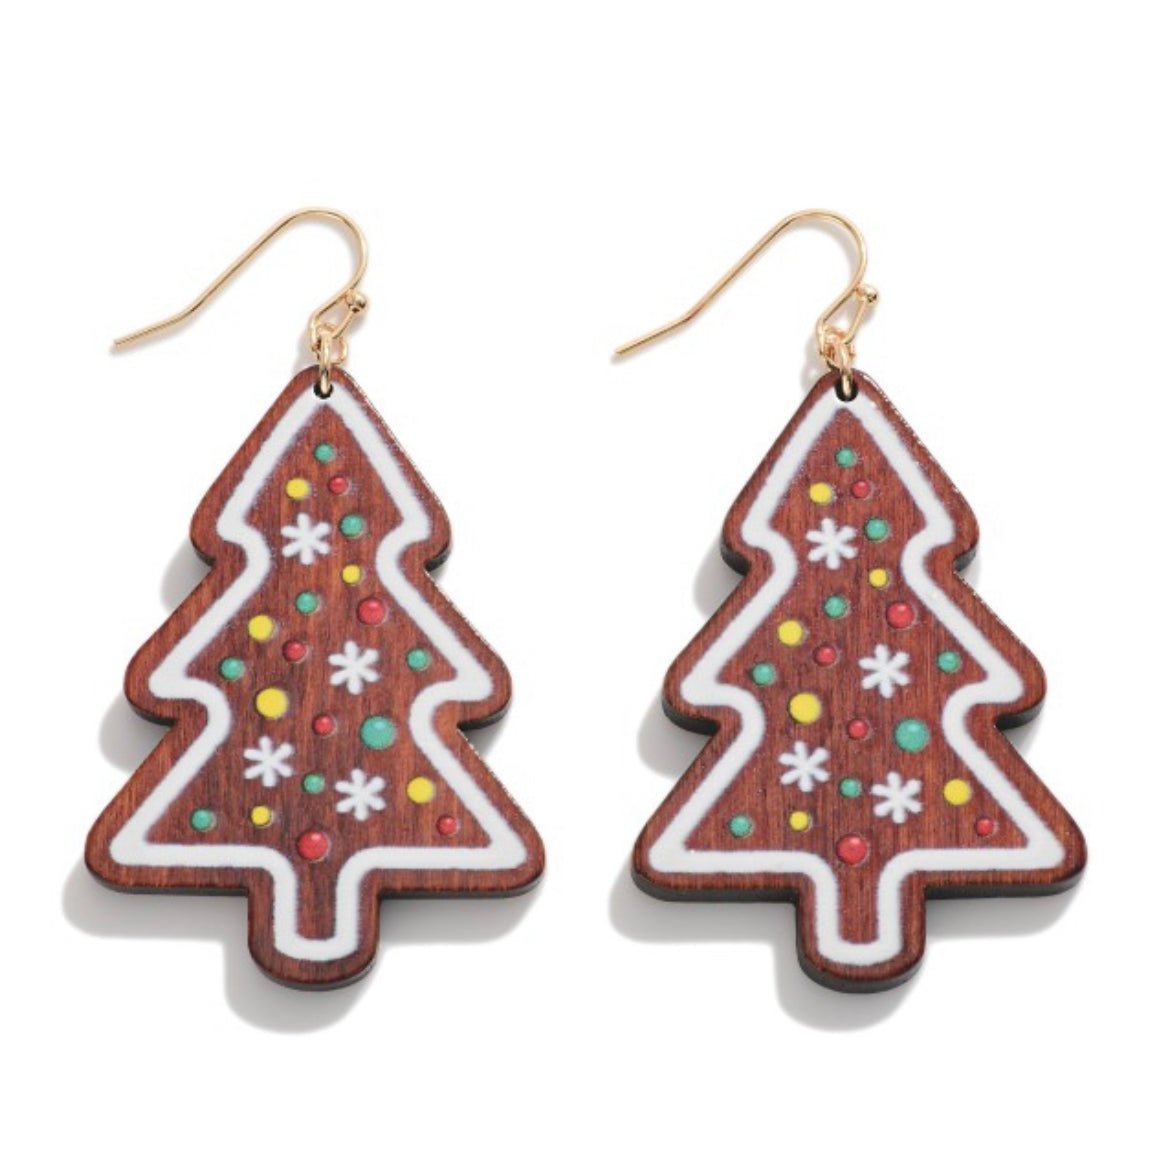 Wooden Christmas Tree Earrings